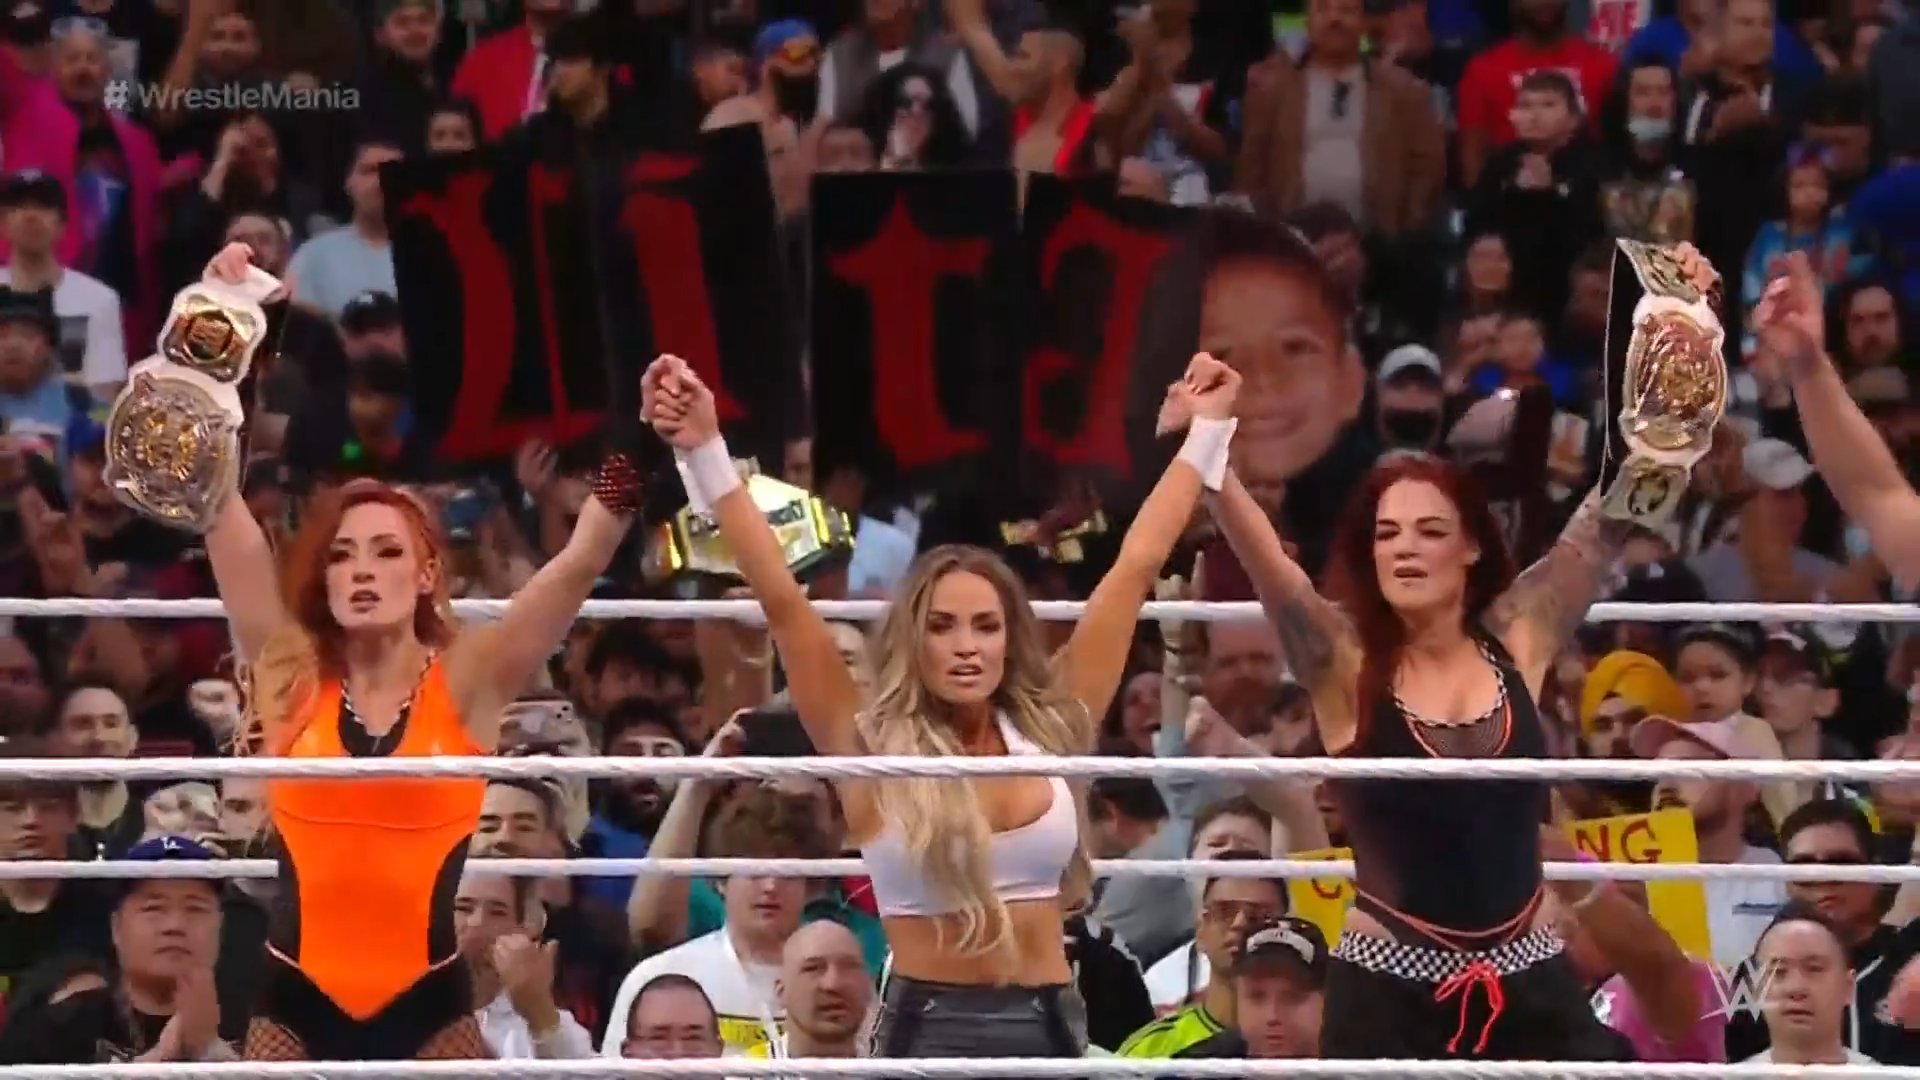 WWE WrestleMania 39 Lynch, Trish, & Lita Defeat Damage CTRL in an